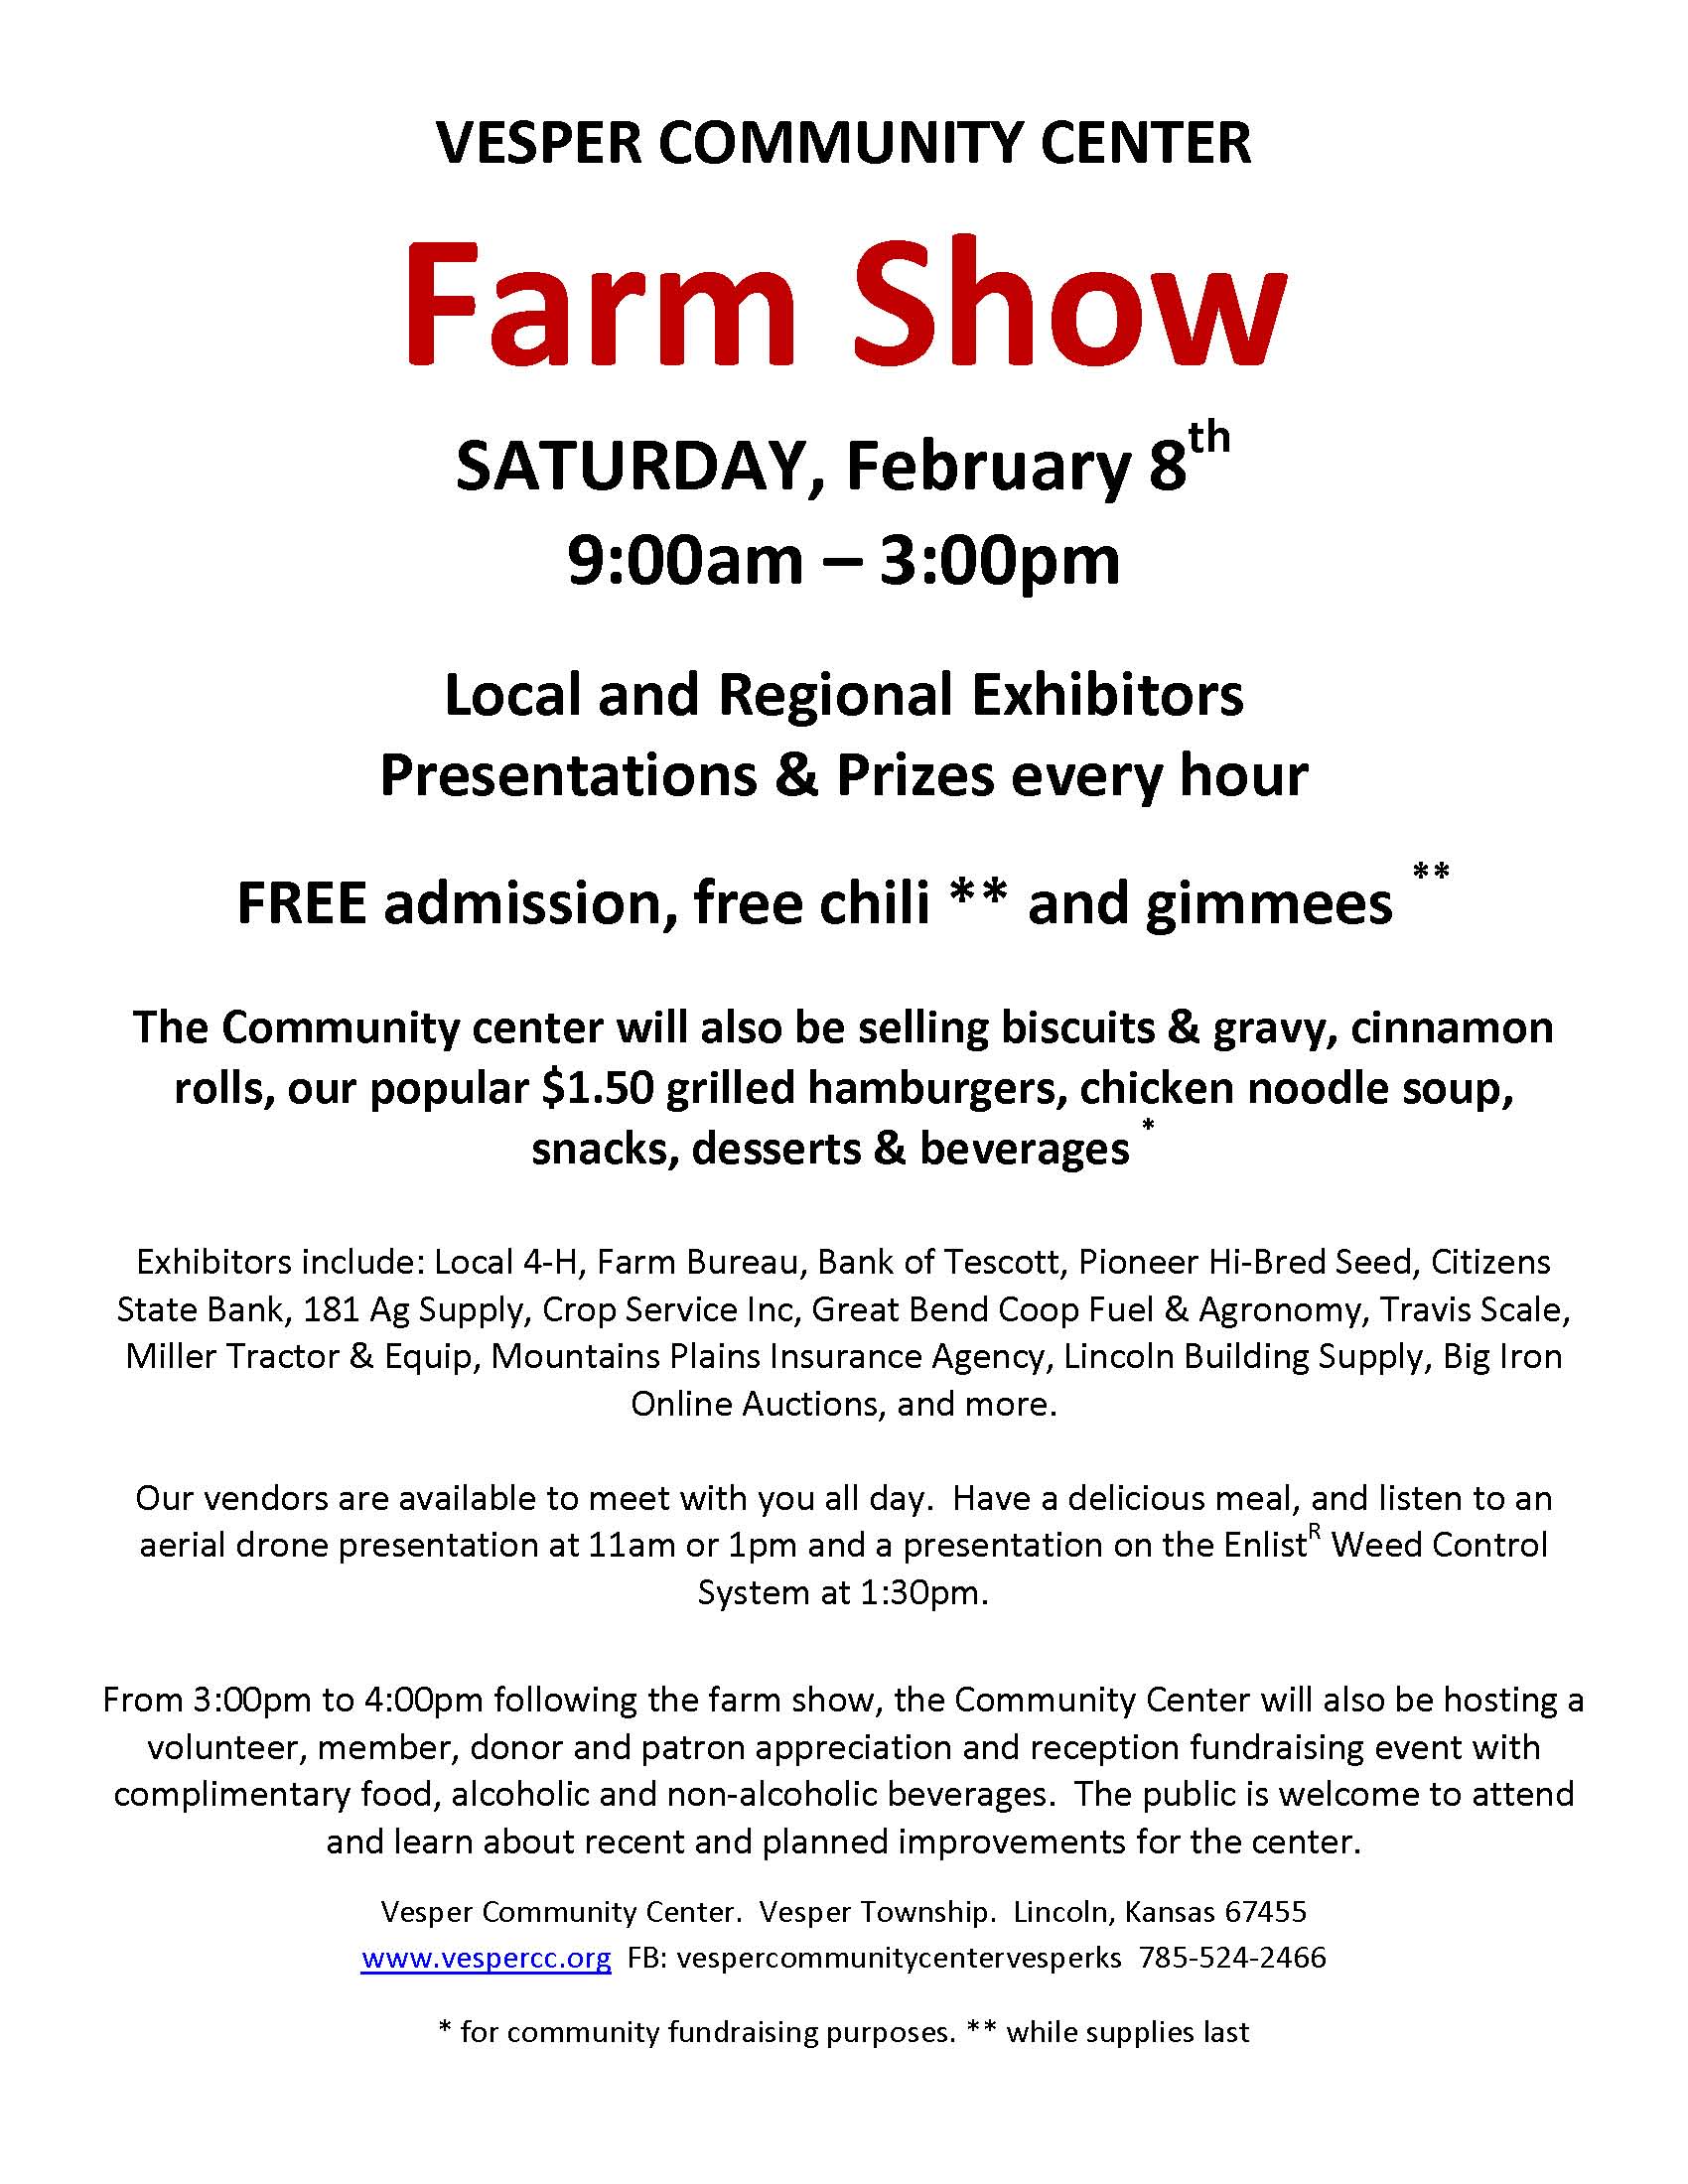 Farm Show Saturday February 8th